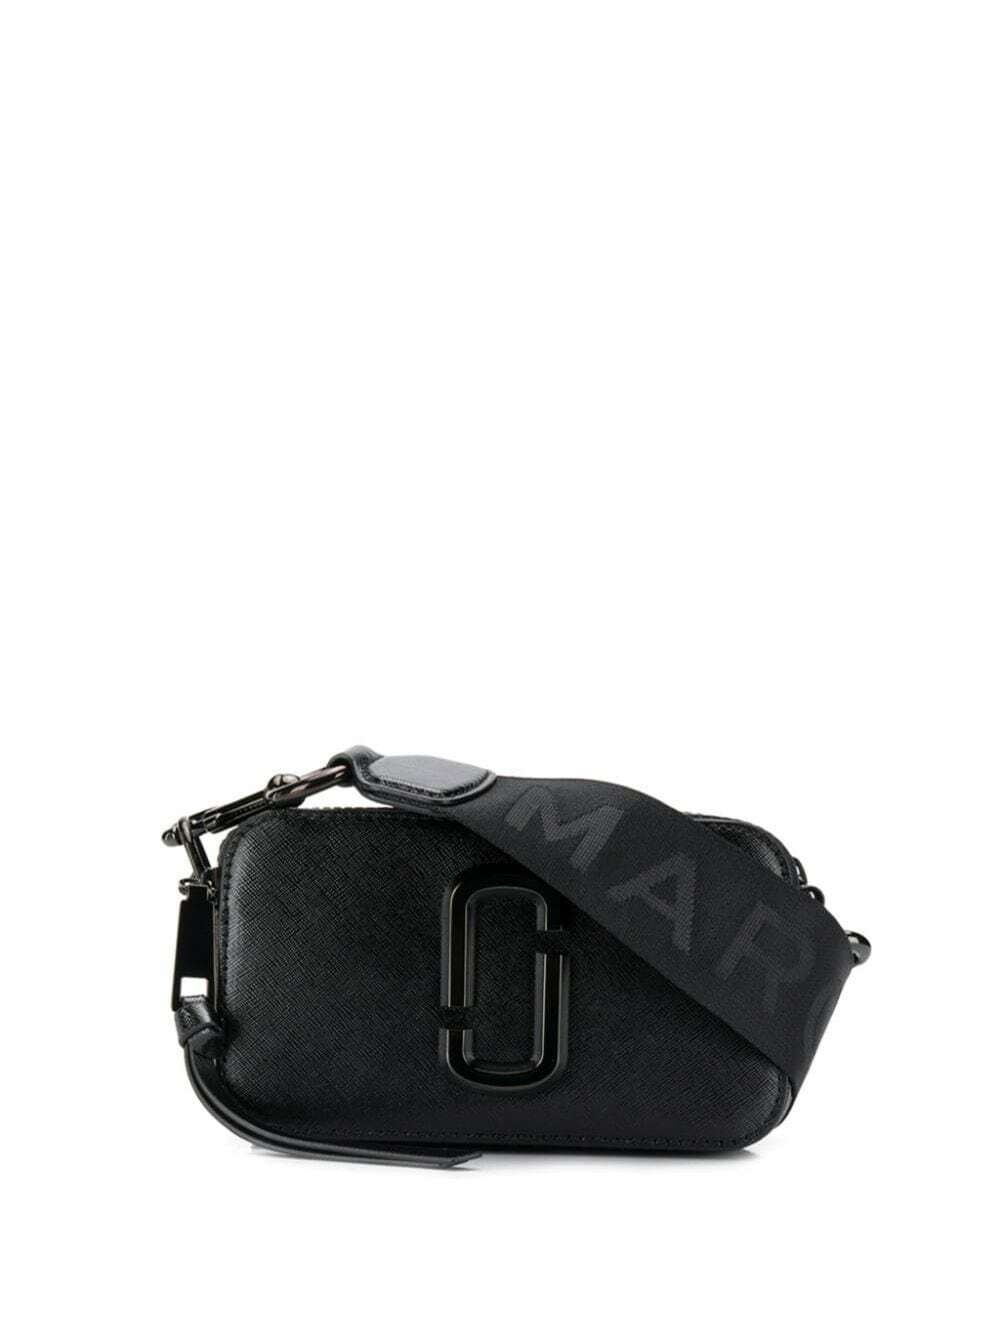 Marc Jacobs Black Snapshot leather cross body bag